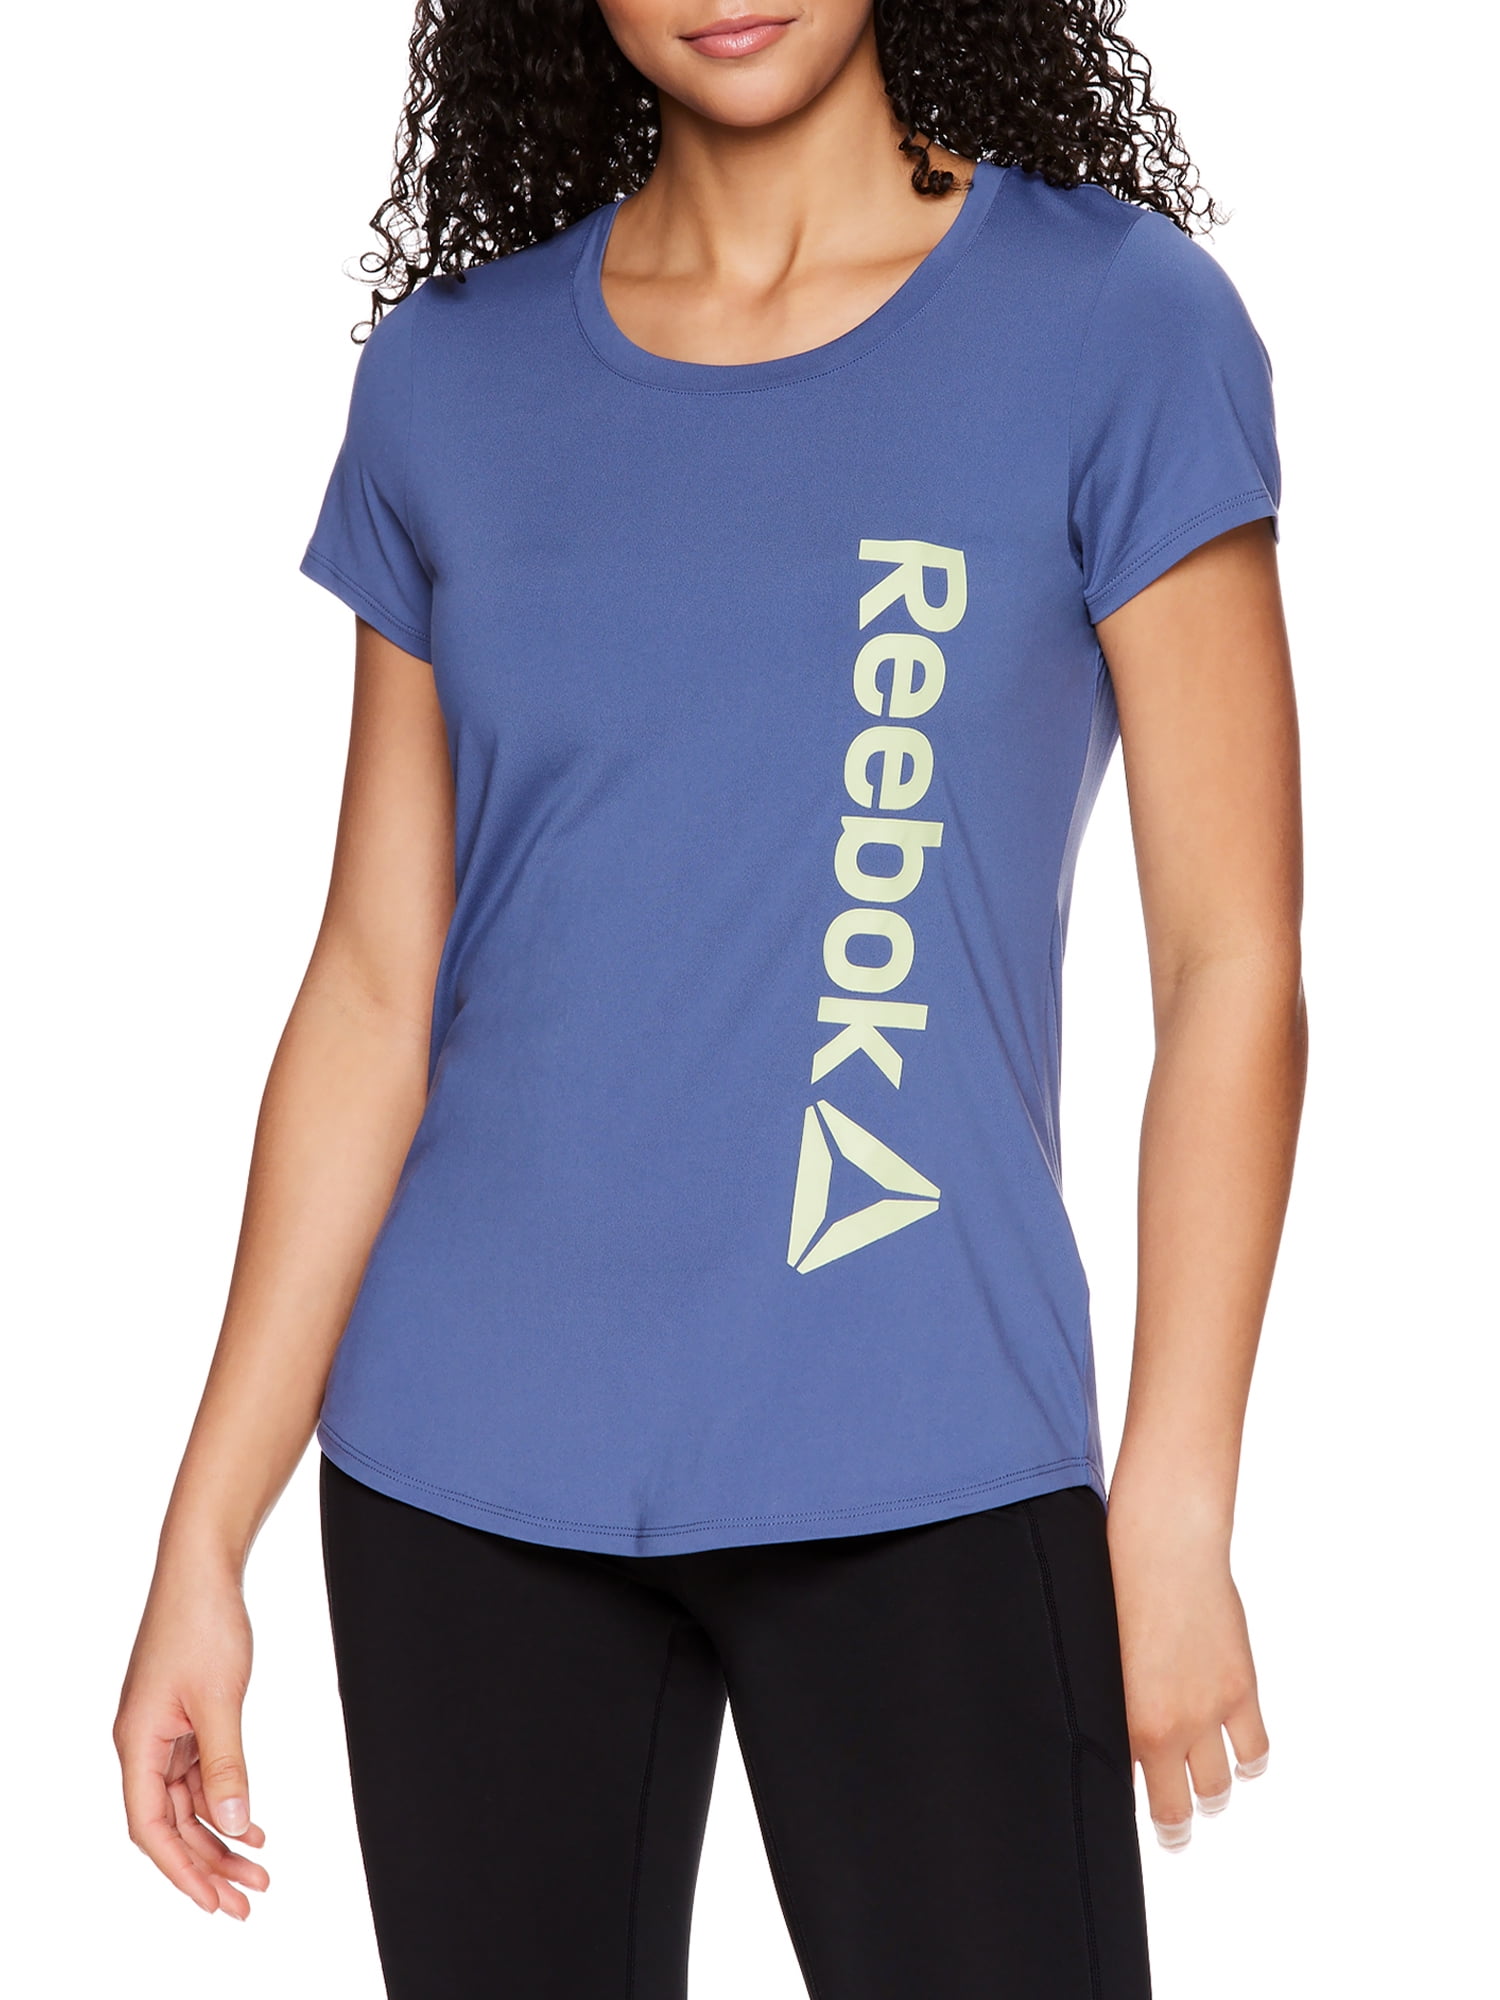 Reebok Women's Fearless Performance Lite Short Sleeve Tee Walmart.com